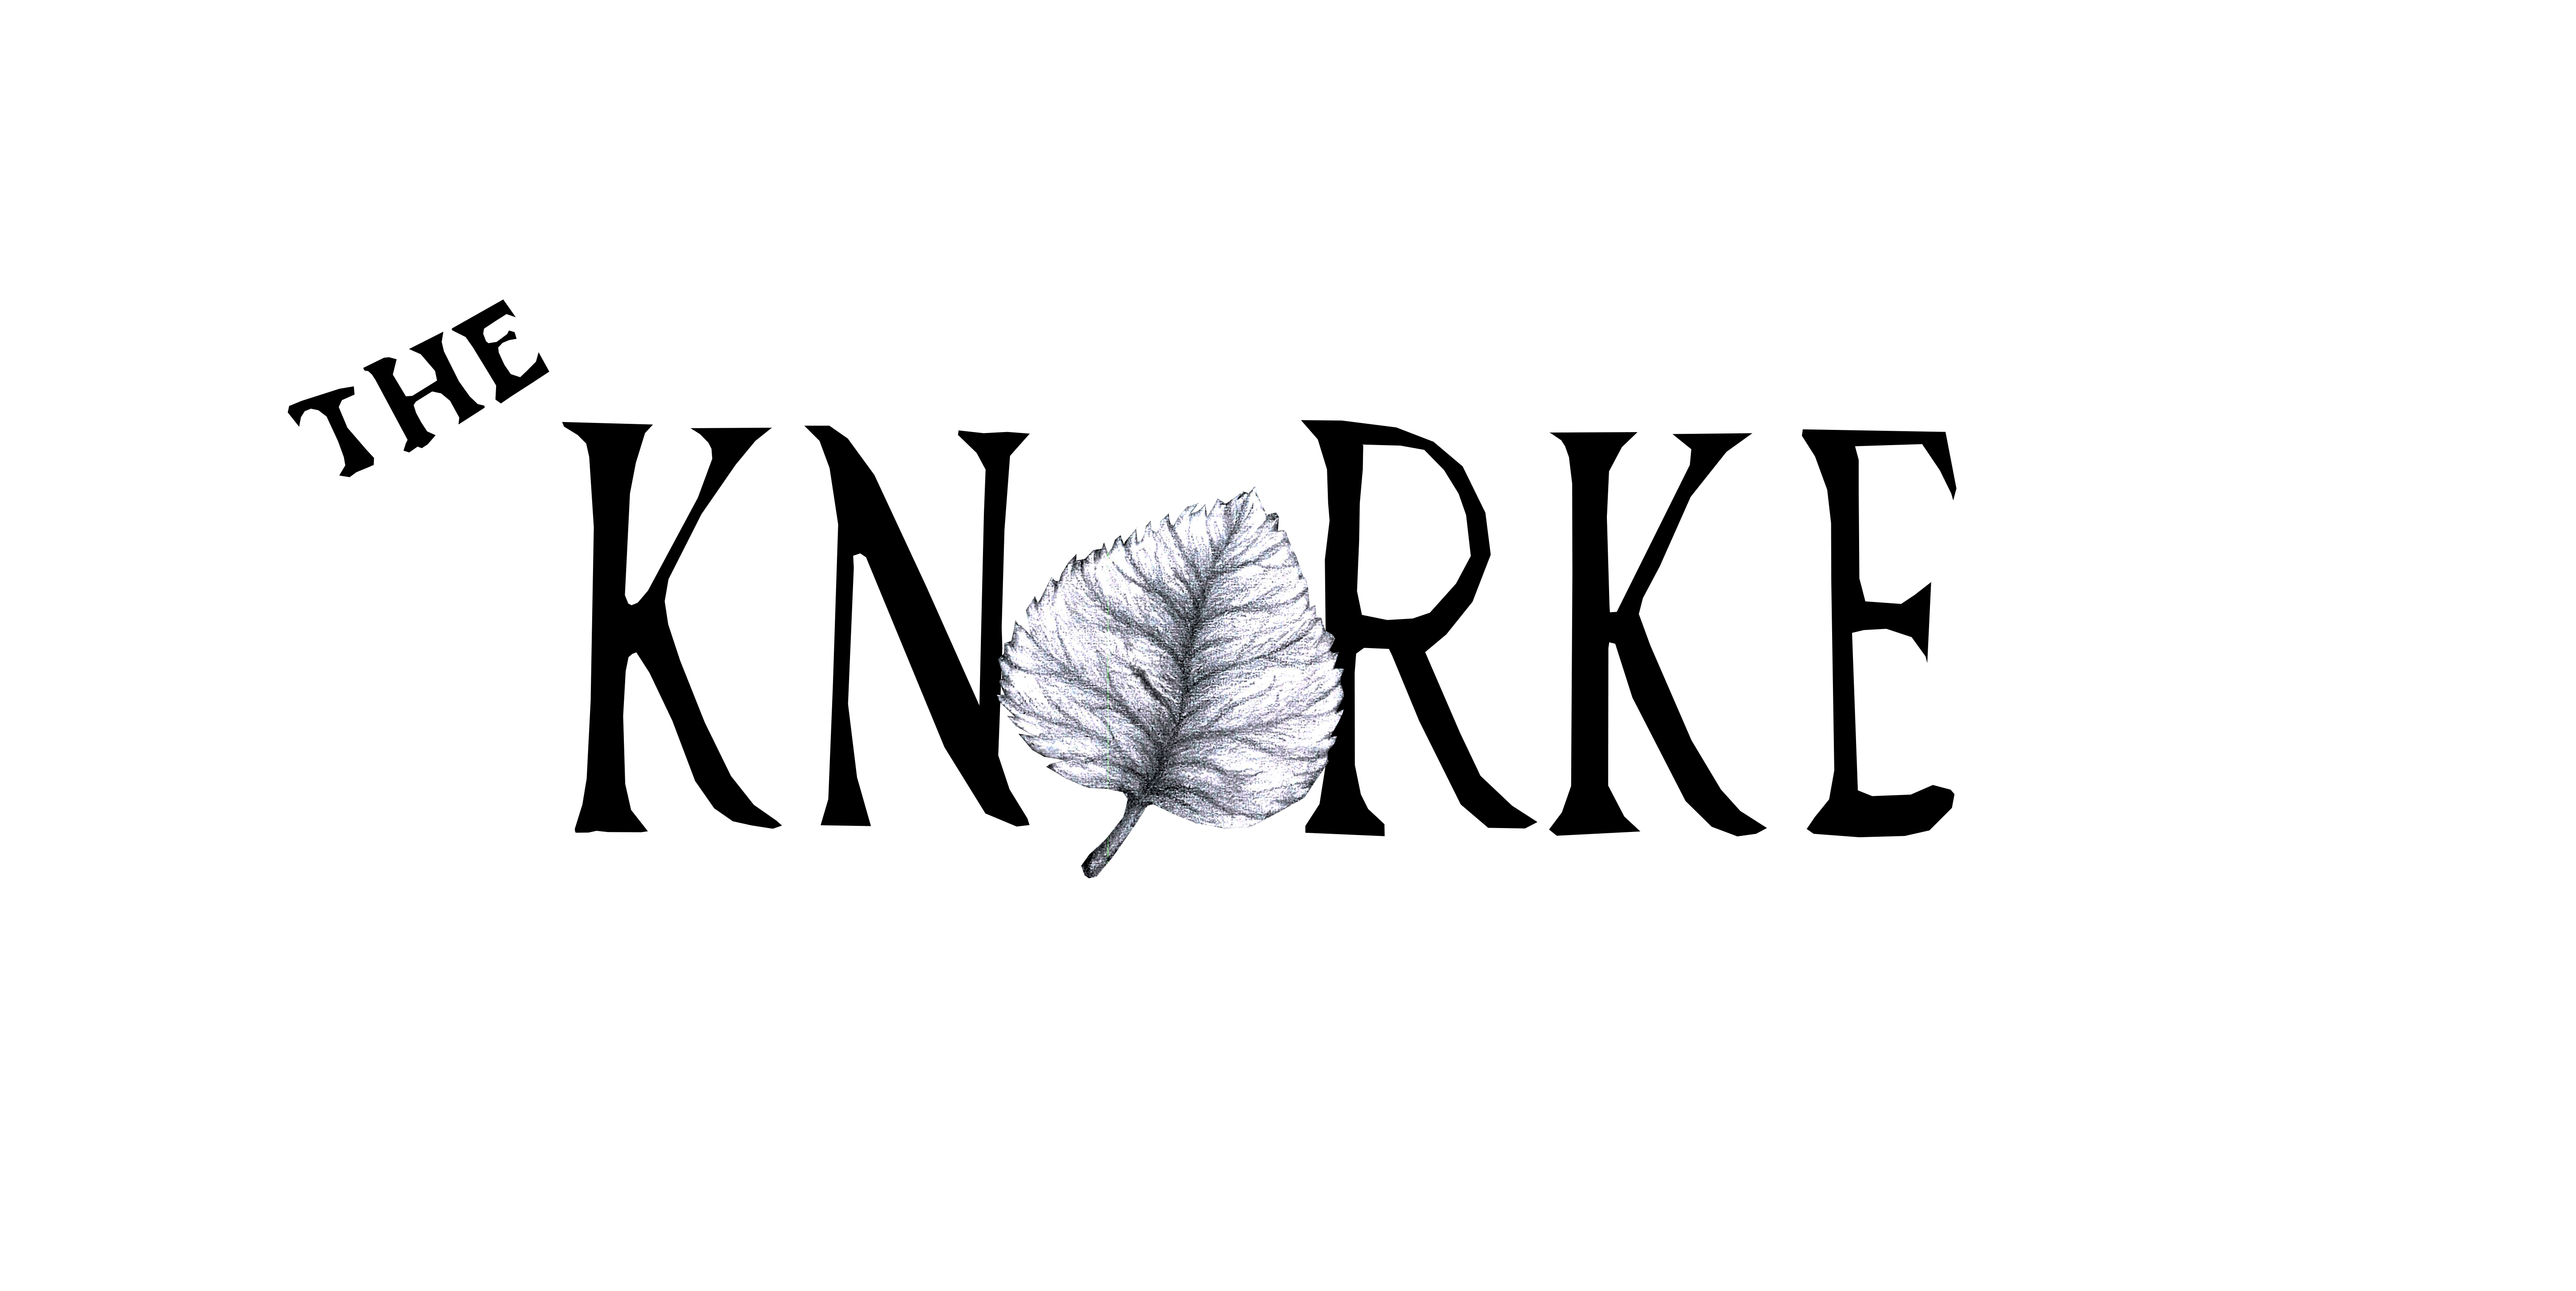 Le Knorke